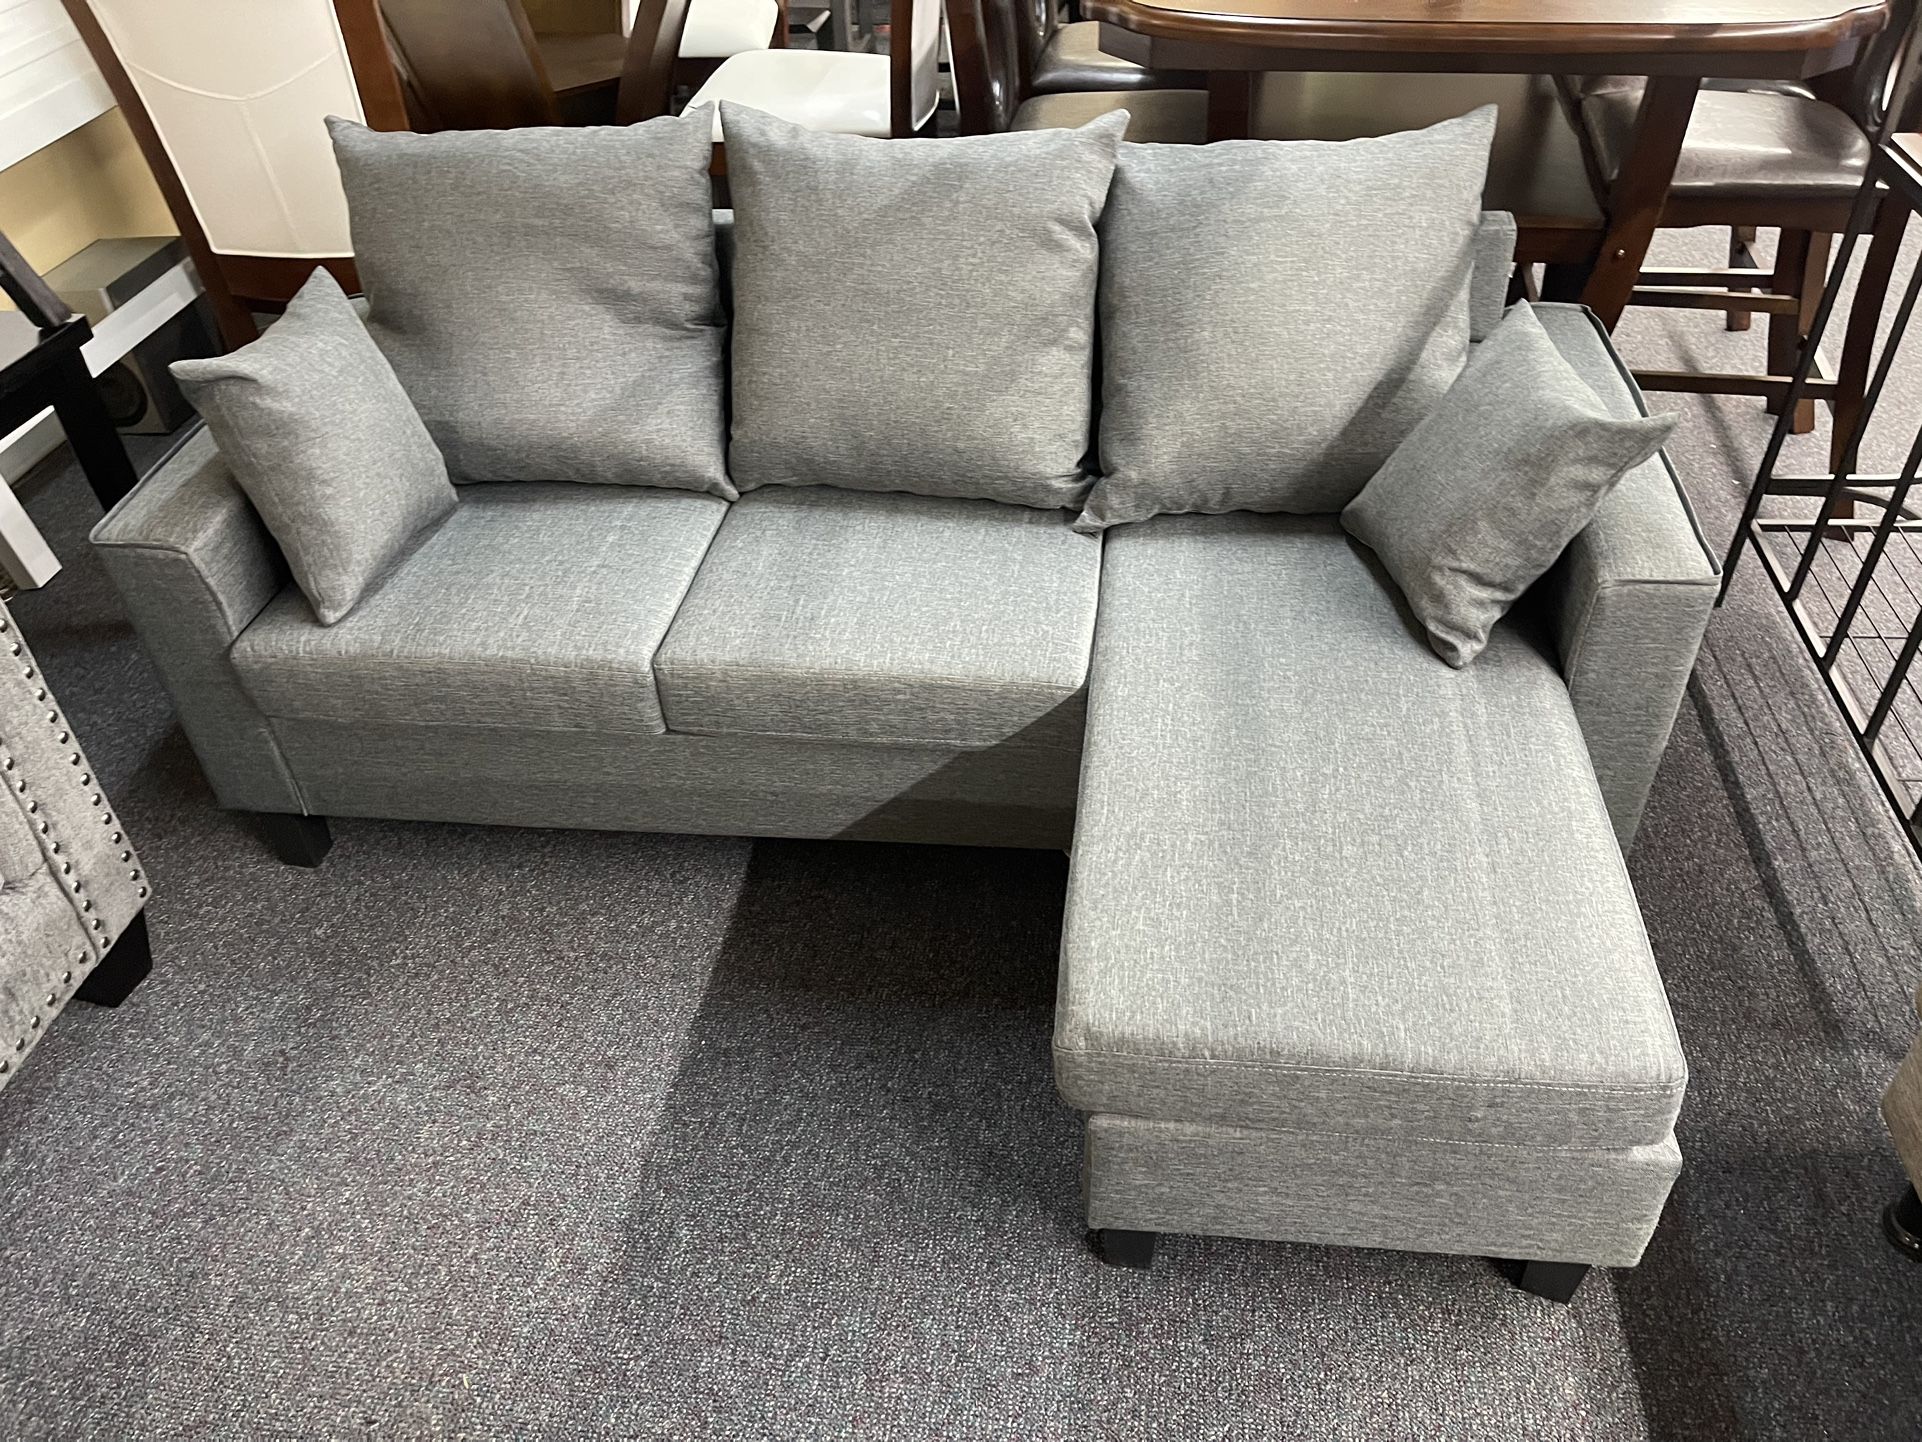 New Gray Sofa Chaise